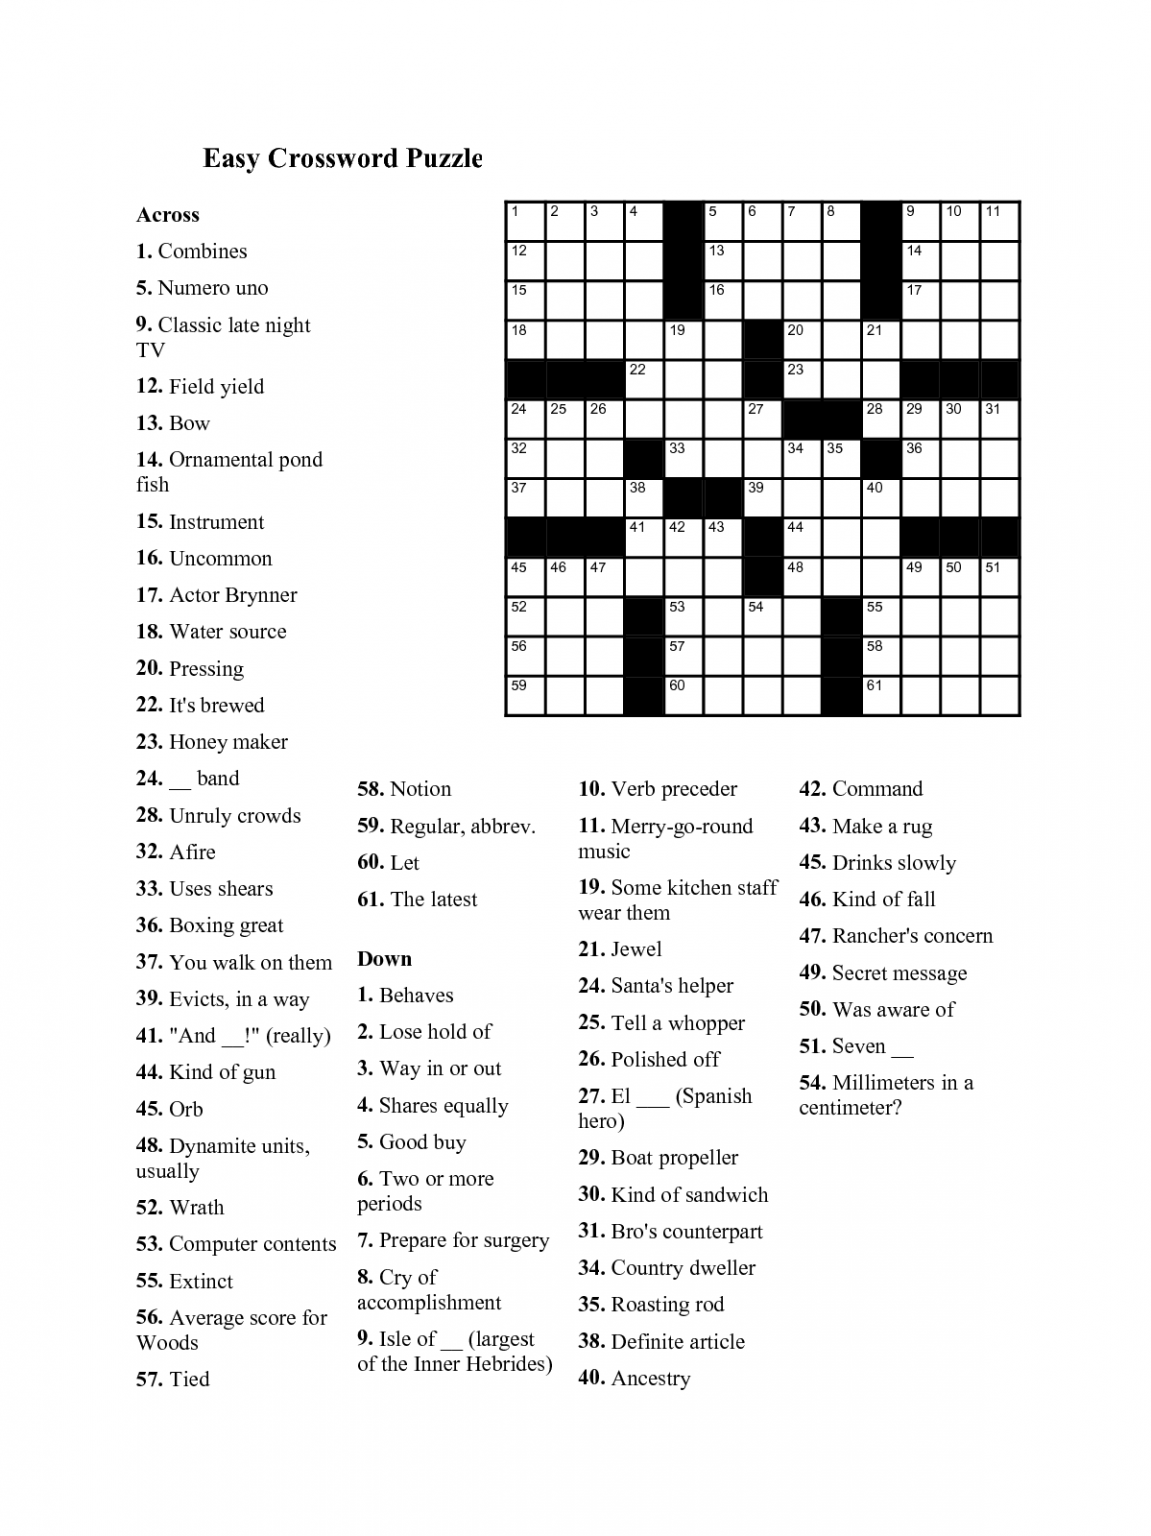 fun-easy-crossword-puzzles-for-seniors-101-activity